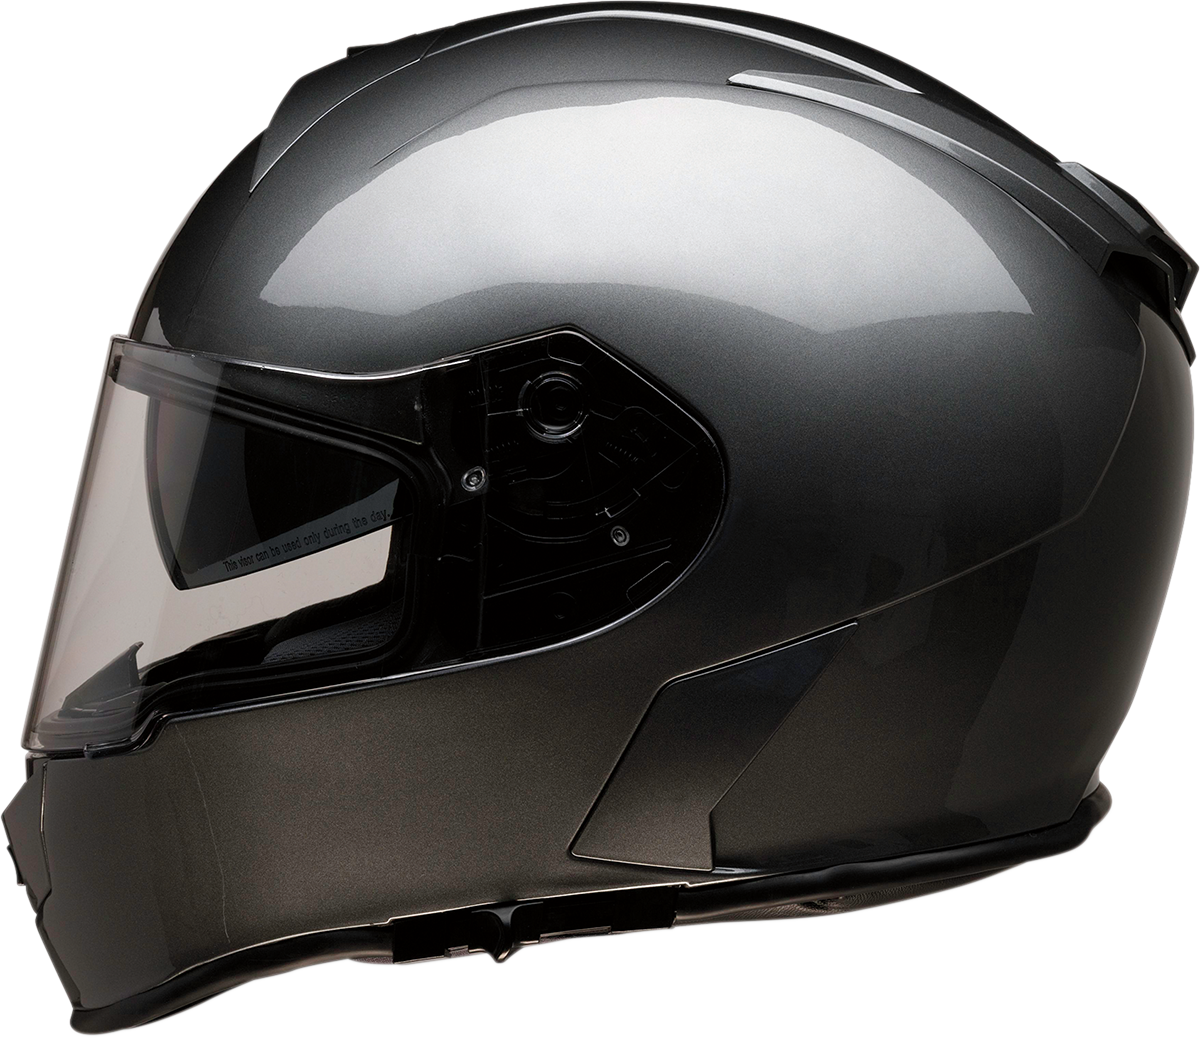 Z1R Warrant Helmet - Dark Silver - Large 0101-13161